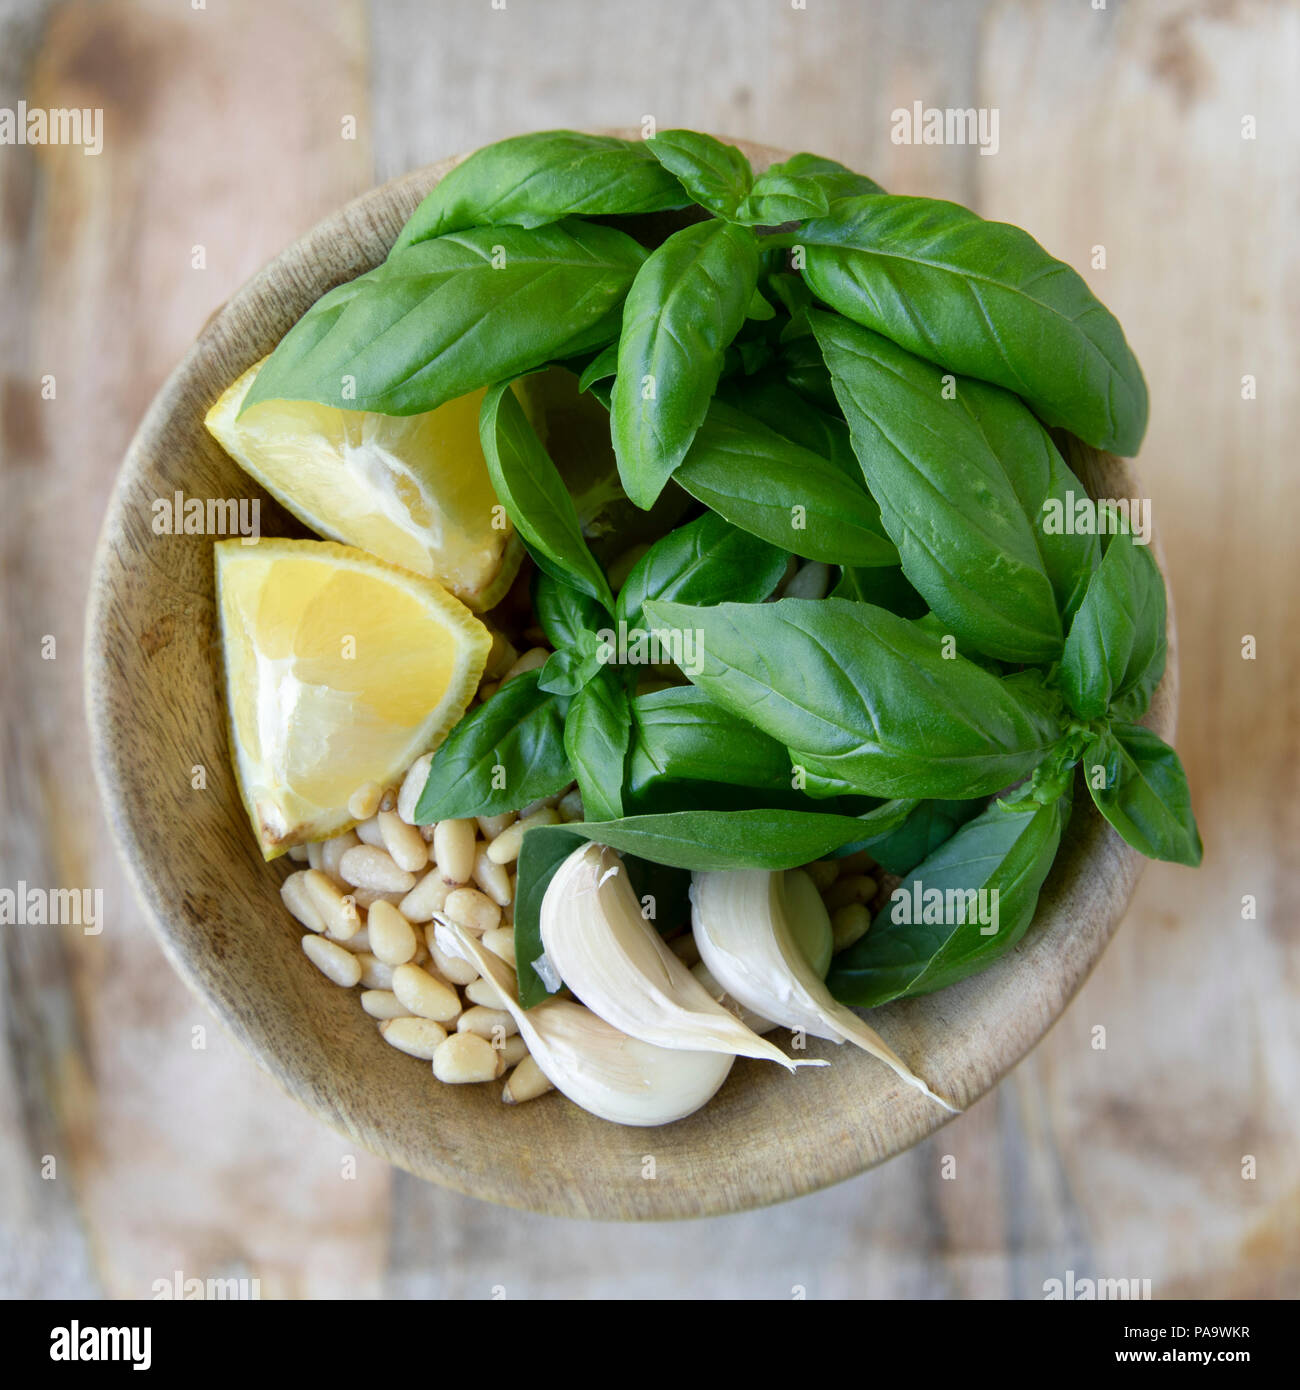 Flat lay bowl of pesto ingredients including fresh basil, lemons, garlic and pine nuts. Stock Photo